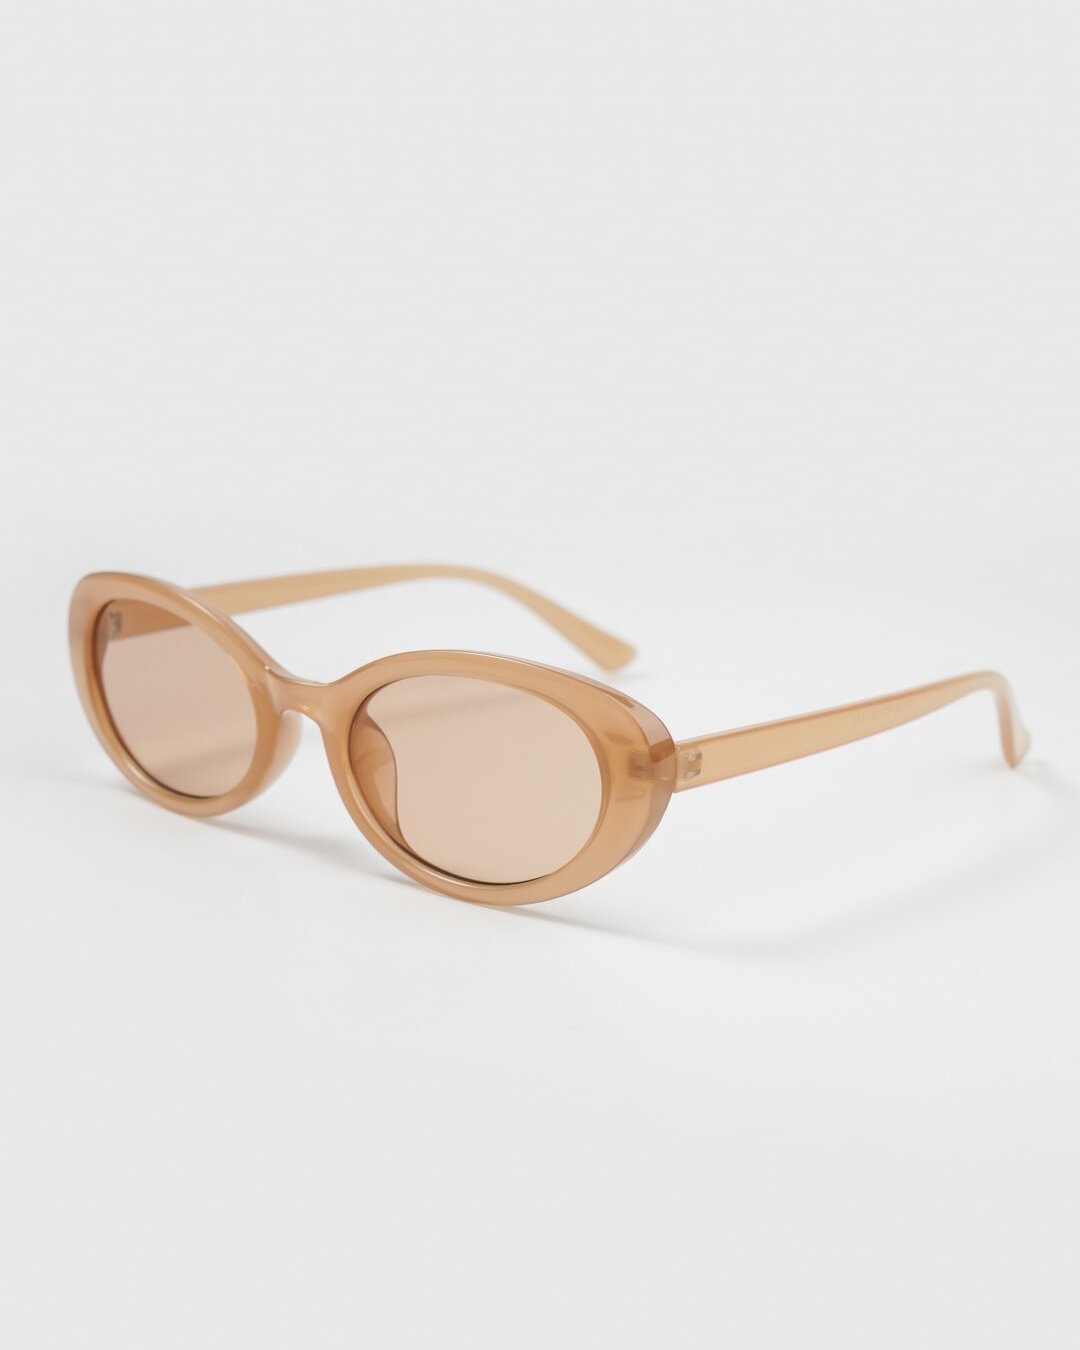 FashionV-FashionV Oval Frames Sunglasses In Pink With Light Lens